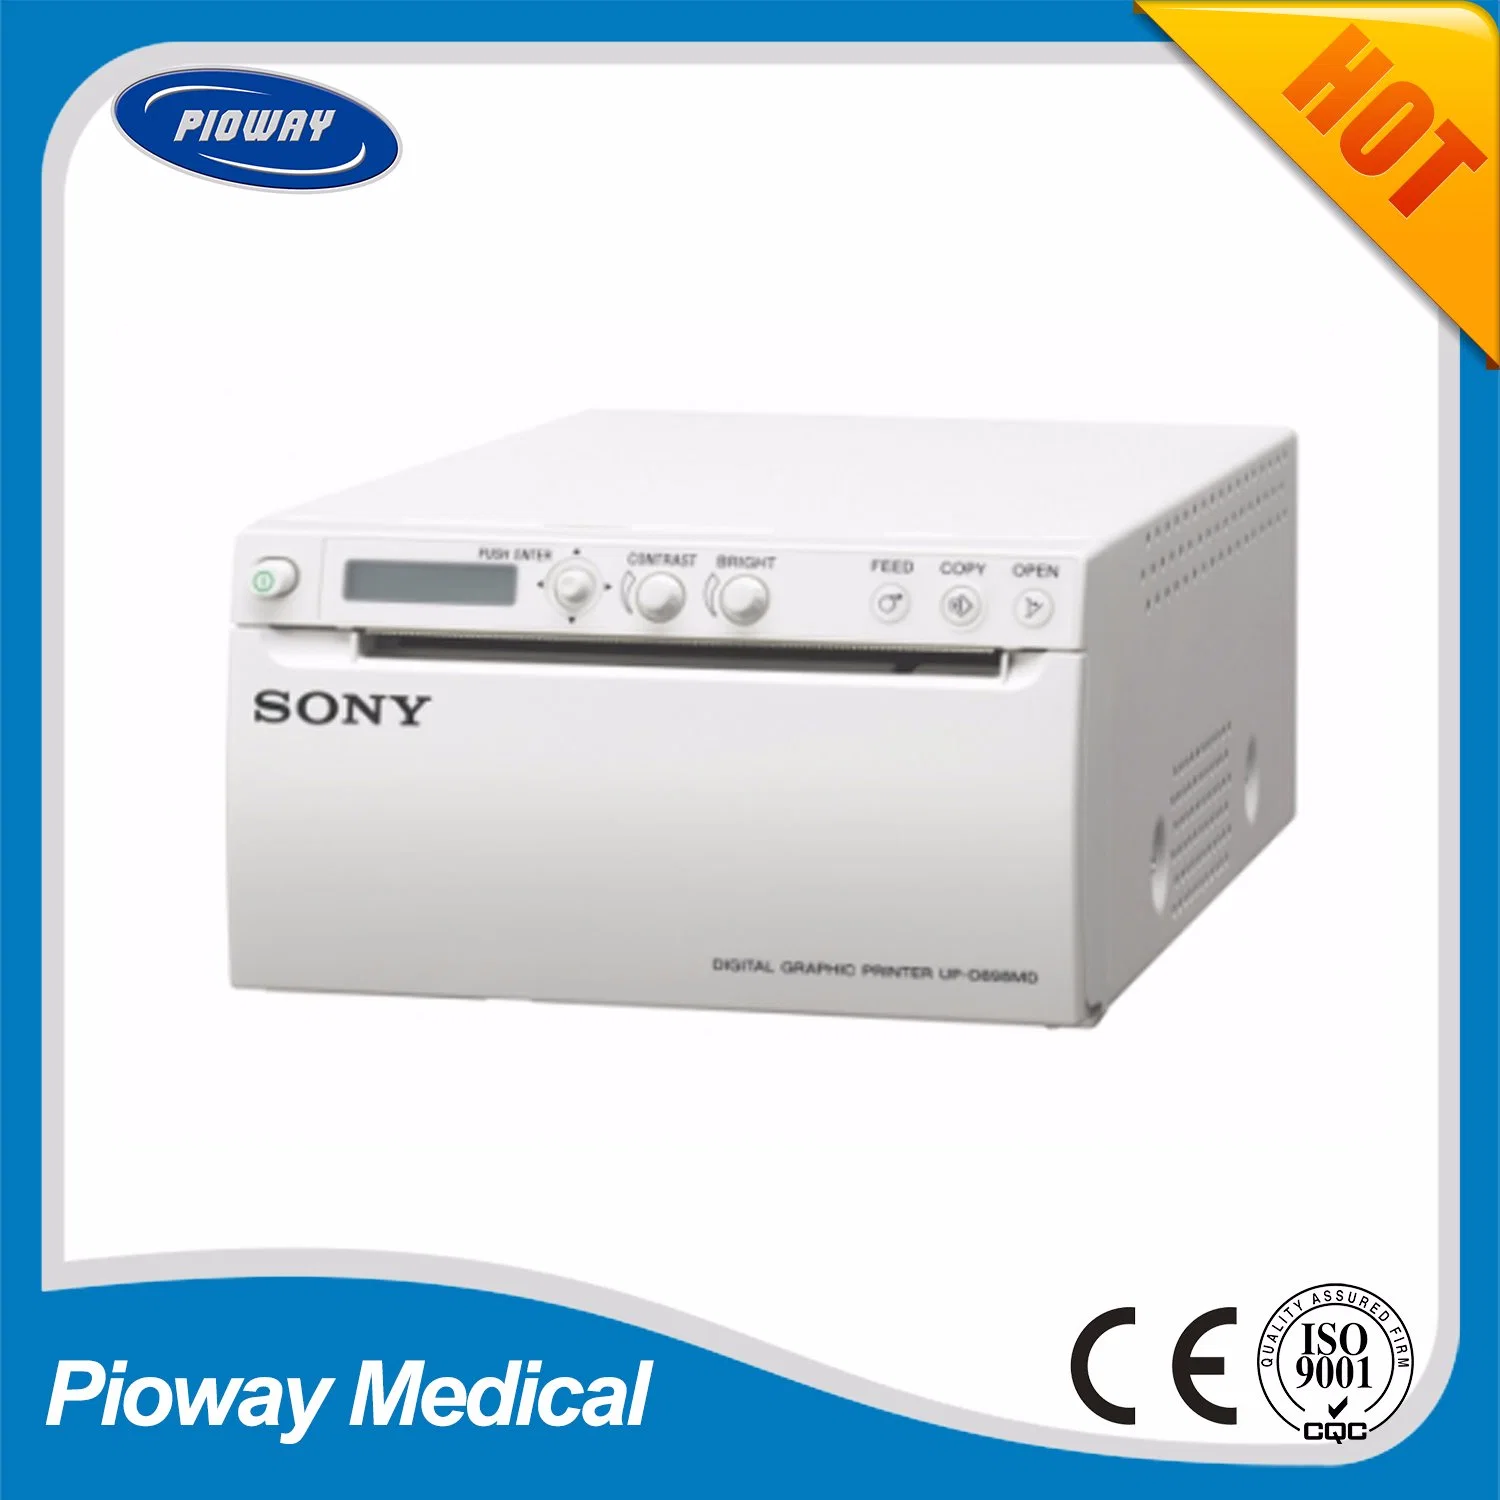 Ultrasound Machine Thermal Printer / Medical Video Printer Sony for Ultrasound System